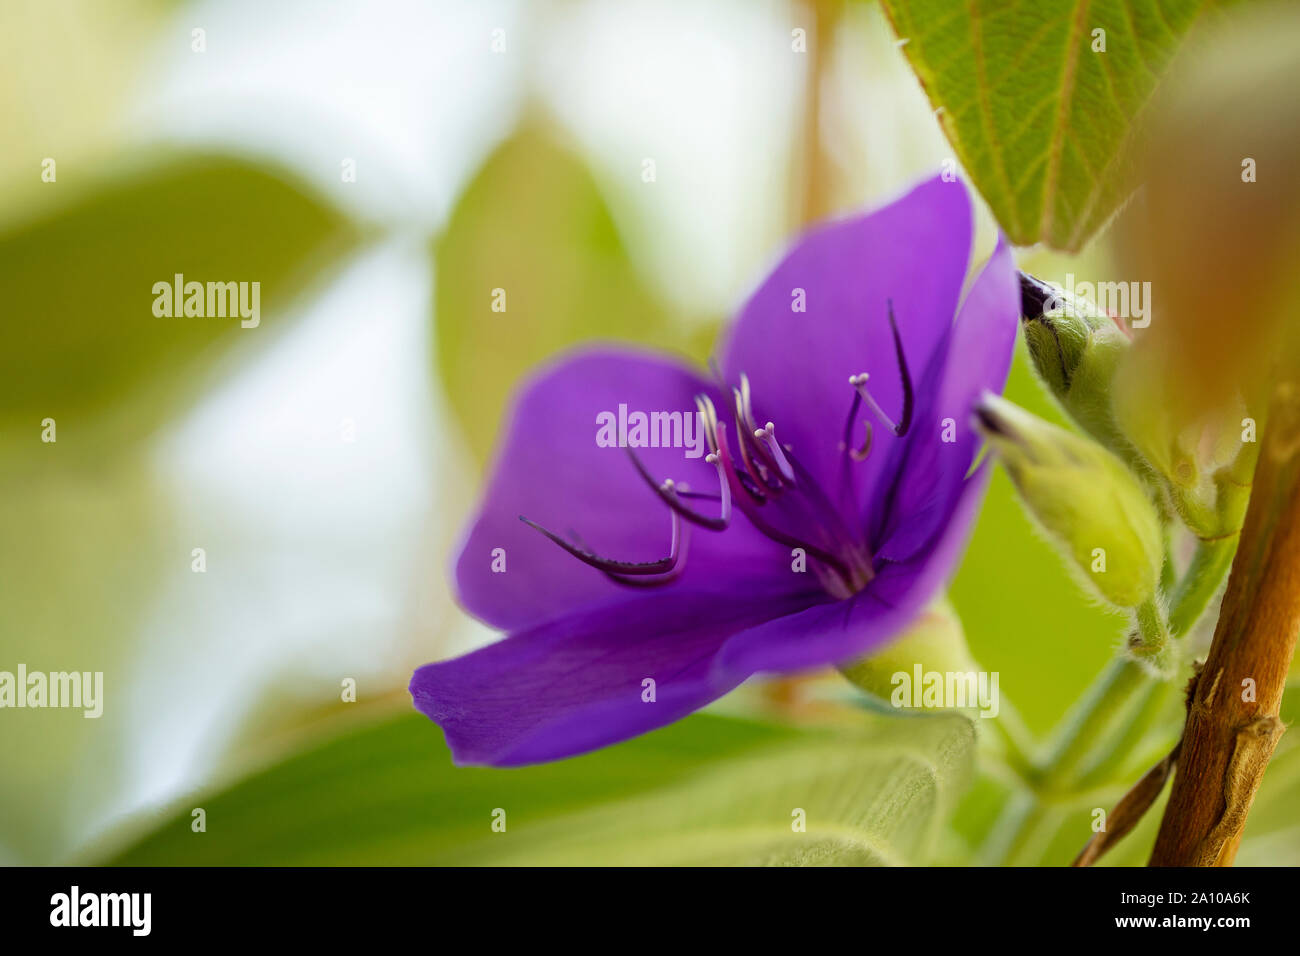 A purple flower on Tibouchina mutabilis, known in Brazil as manacá-da-serra and in Australia as glory bush. Stock Photo